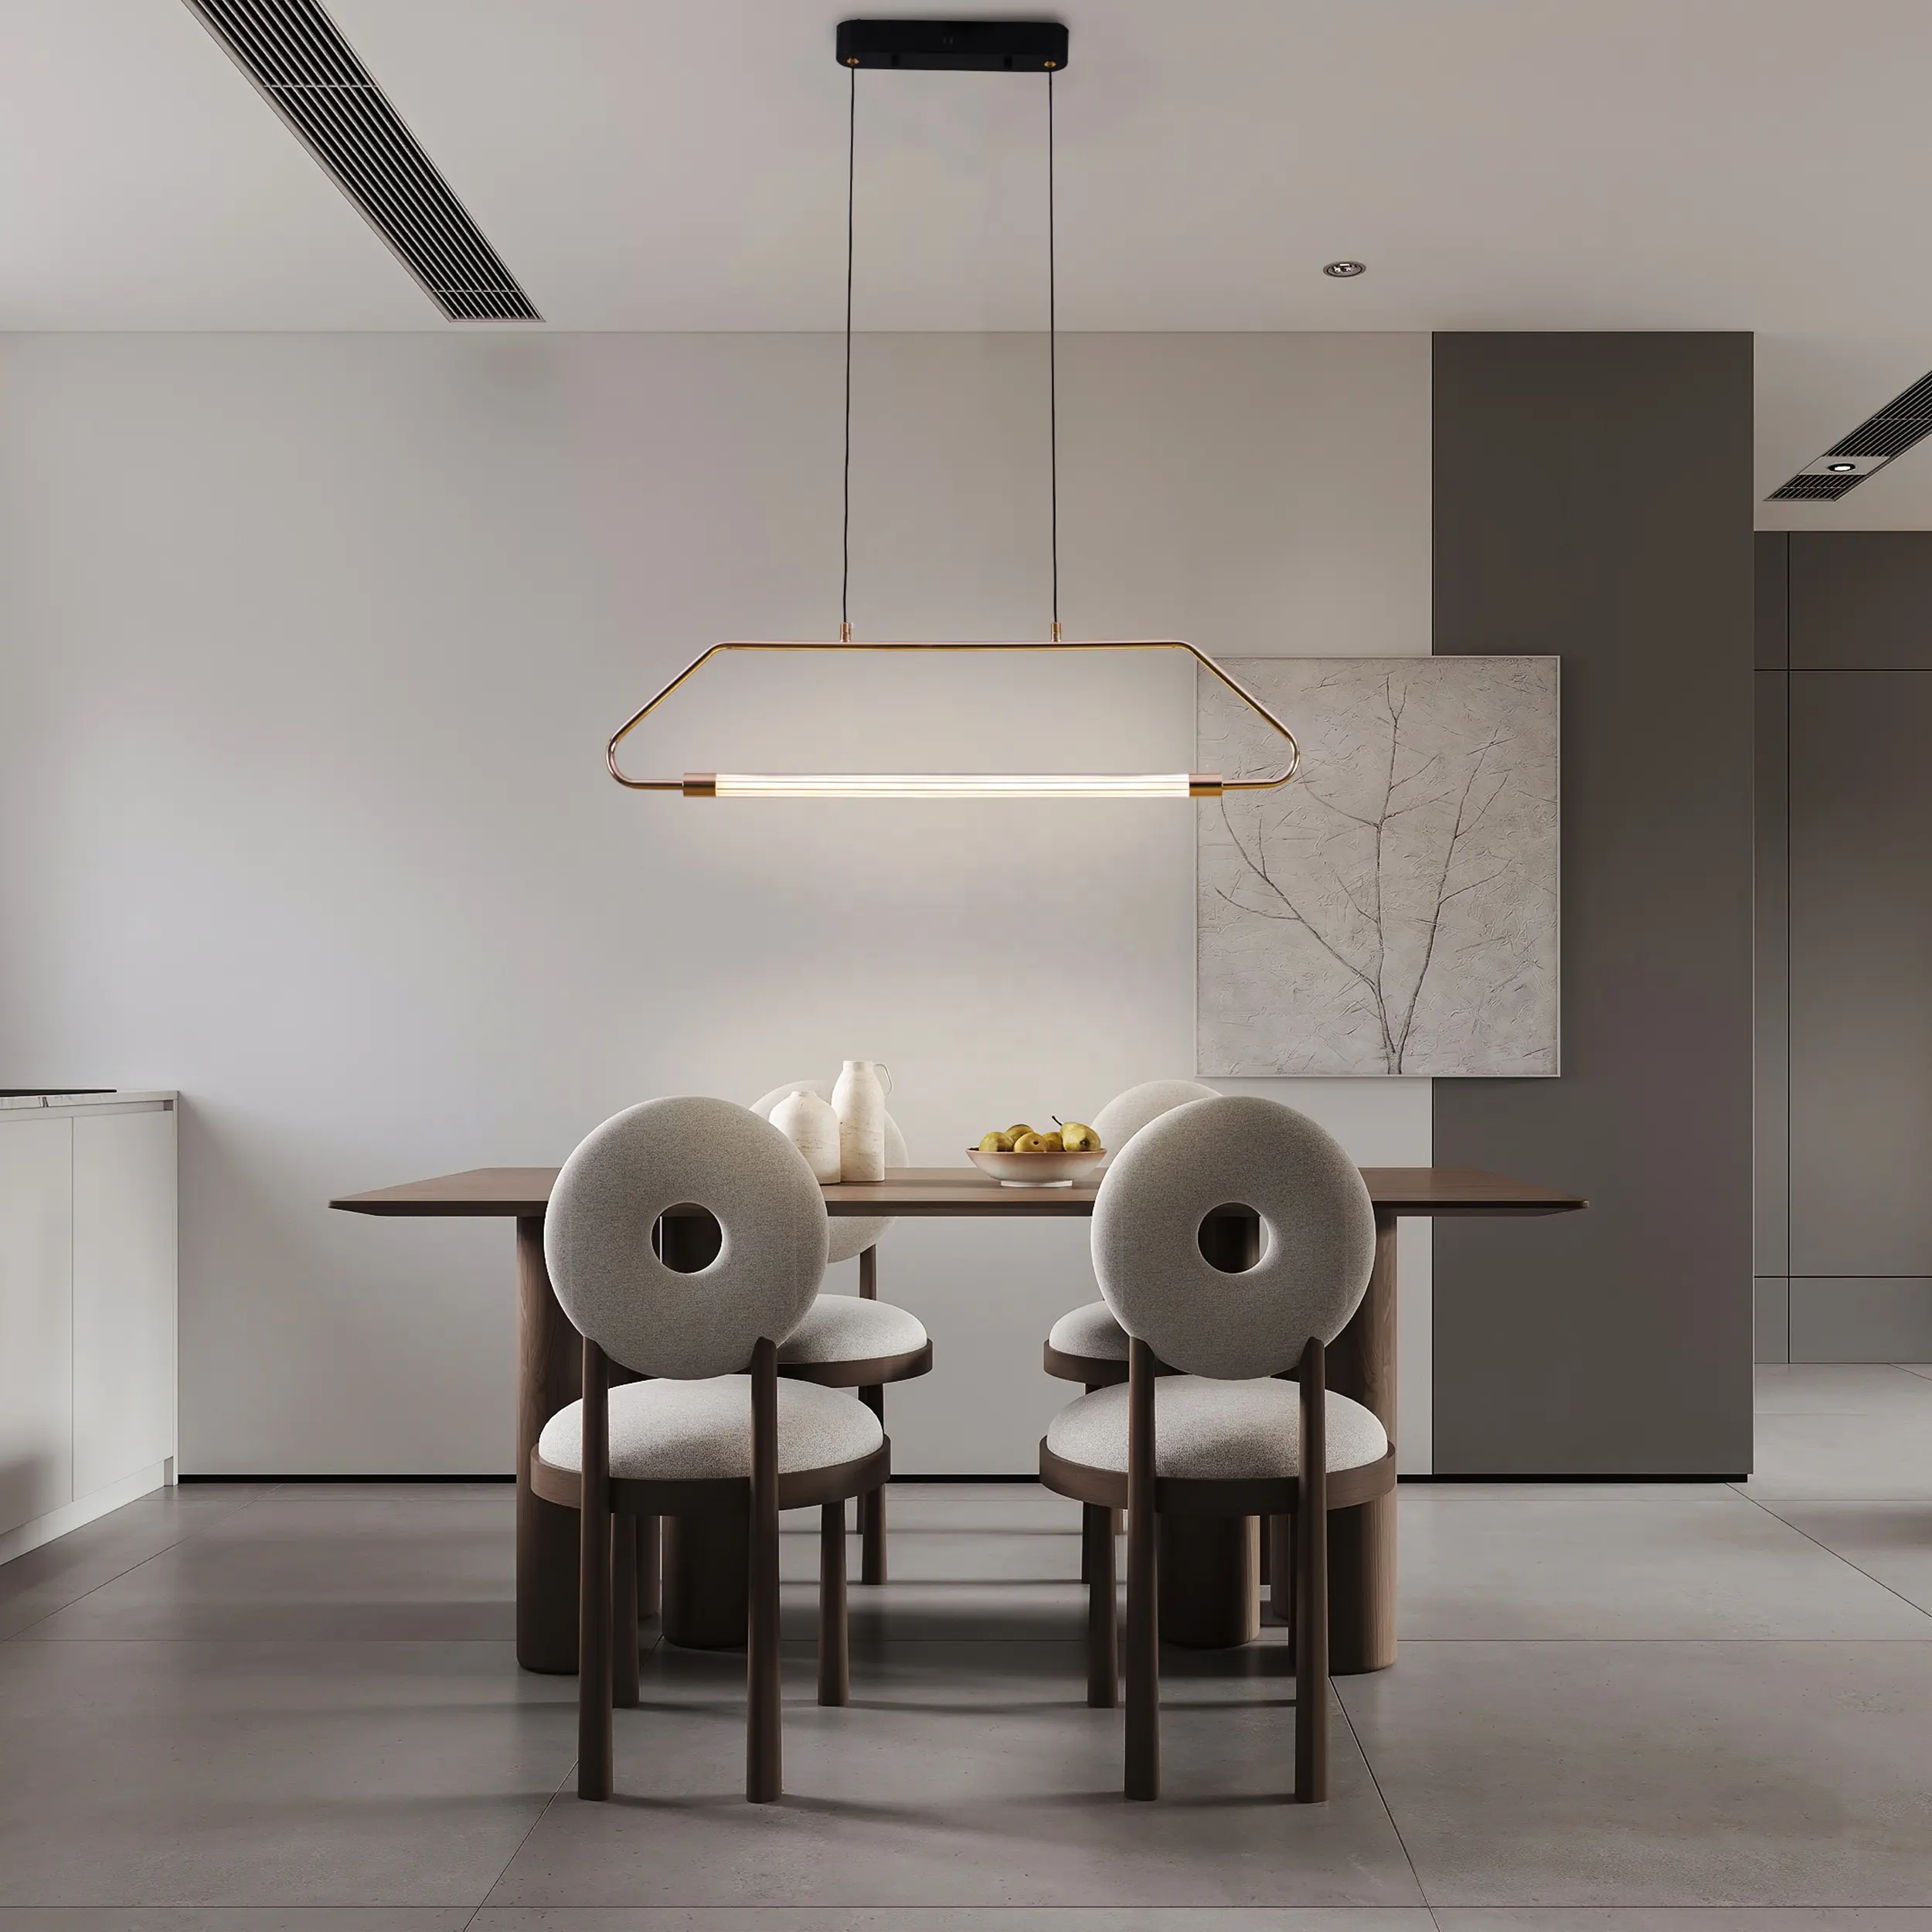 Led Line Pendant Light Dining Room Lighting Modern Design Led Tri Color Changing Acrylic & Metal Hanging Lighting Fixture